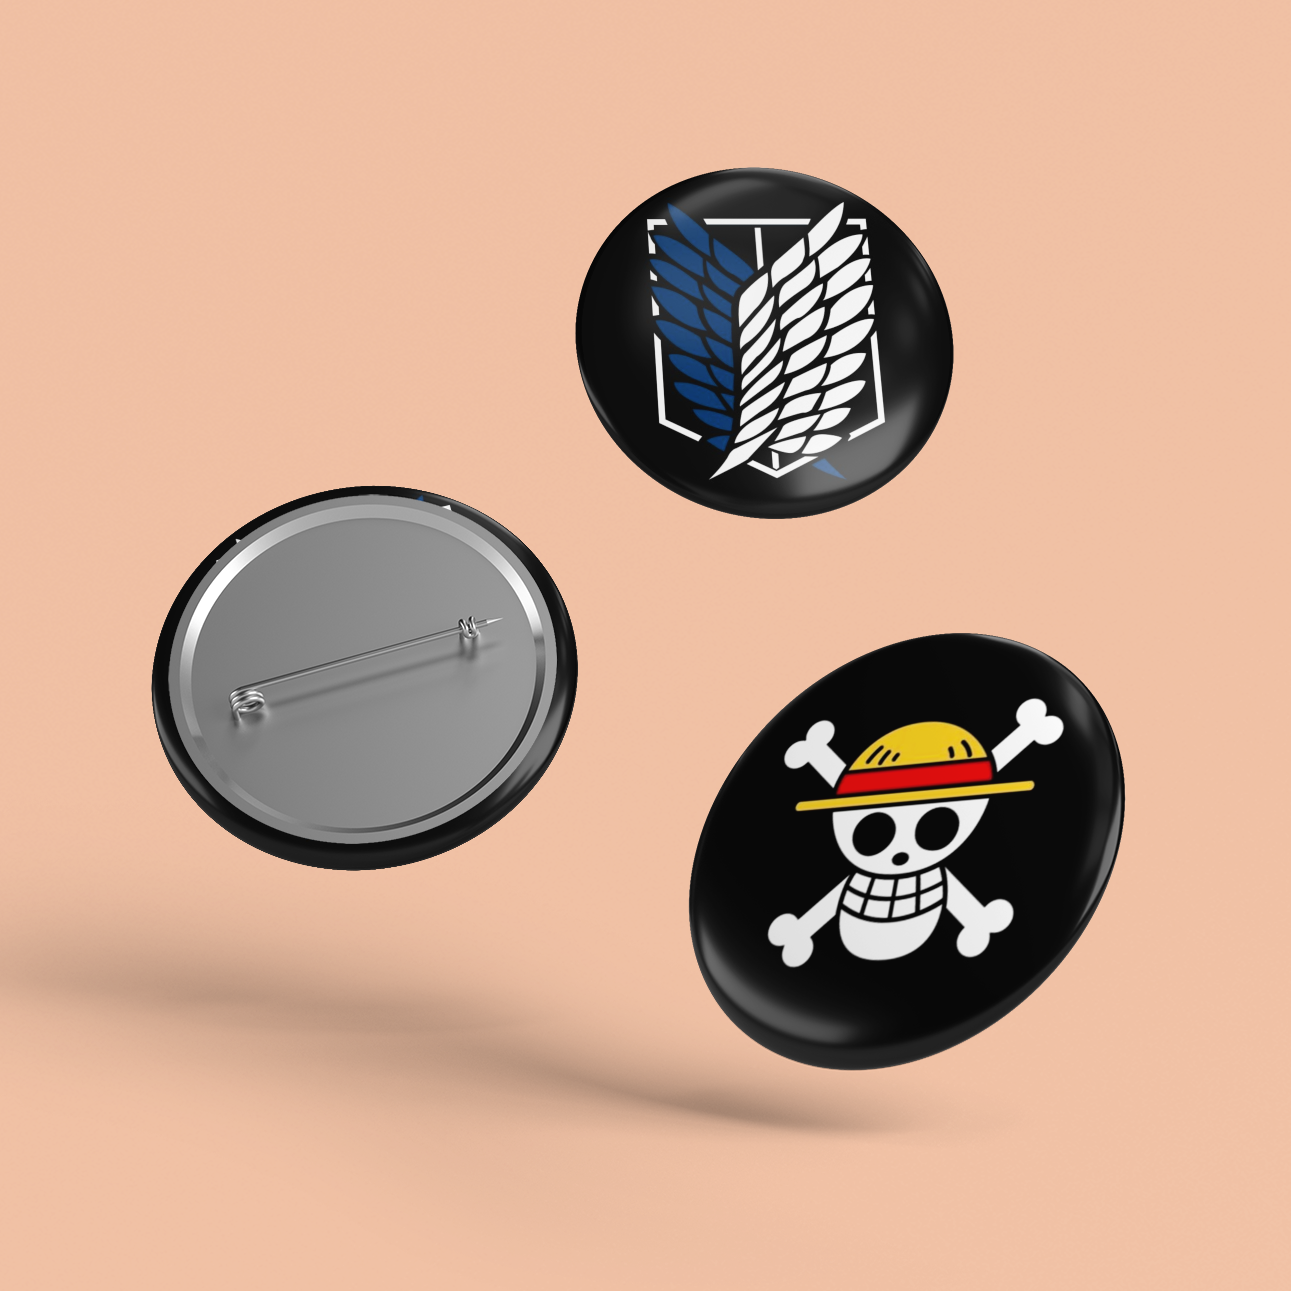 Pack of 3 Anime Badges – AOT Wings Of Freedom + Akatsuki + OP Logo